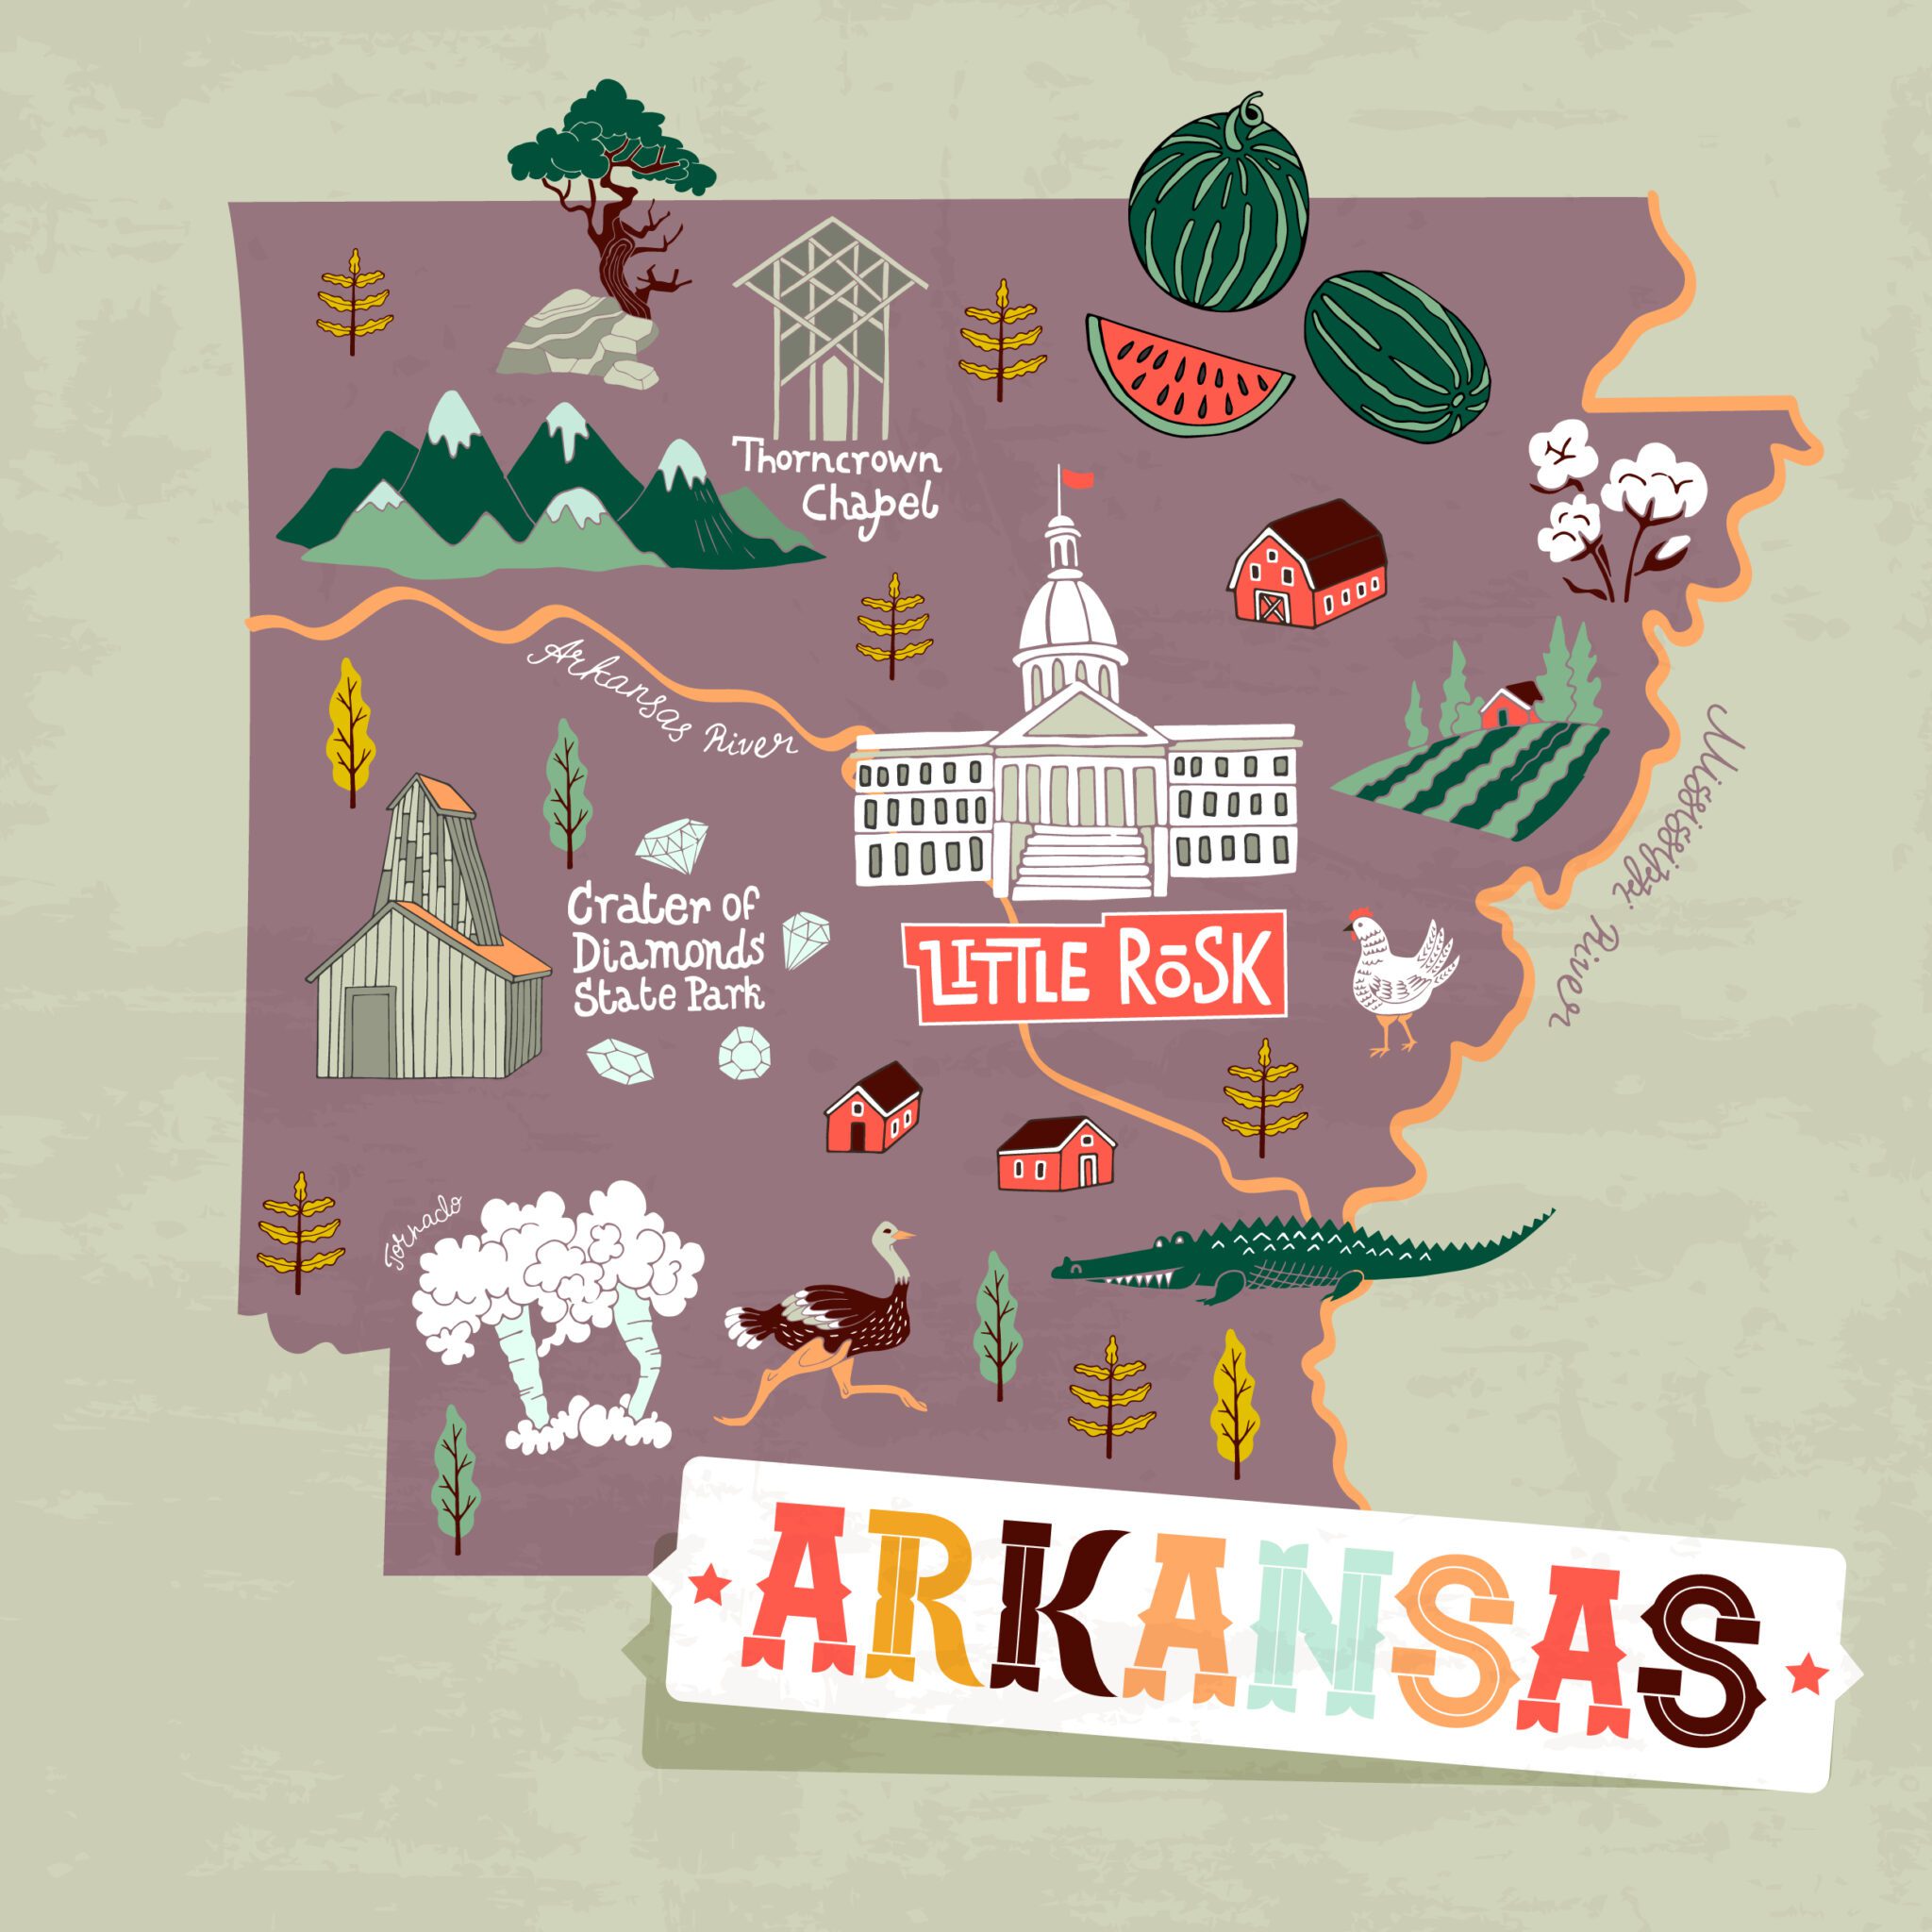 Arkansas Property Tax Return